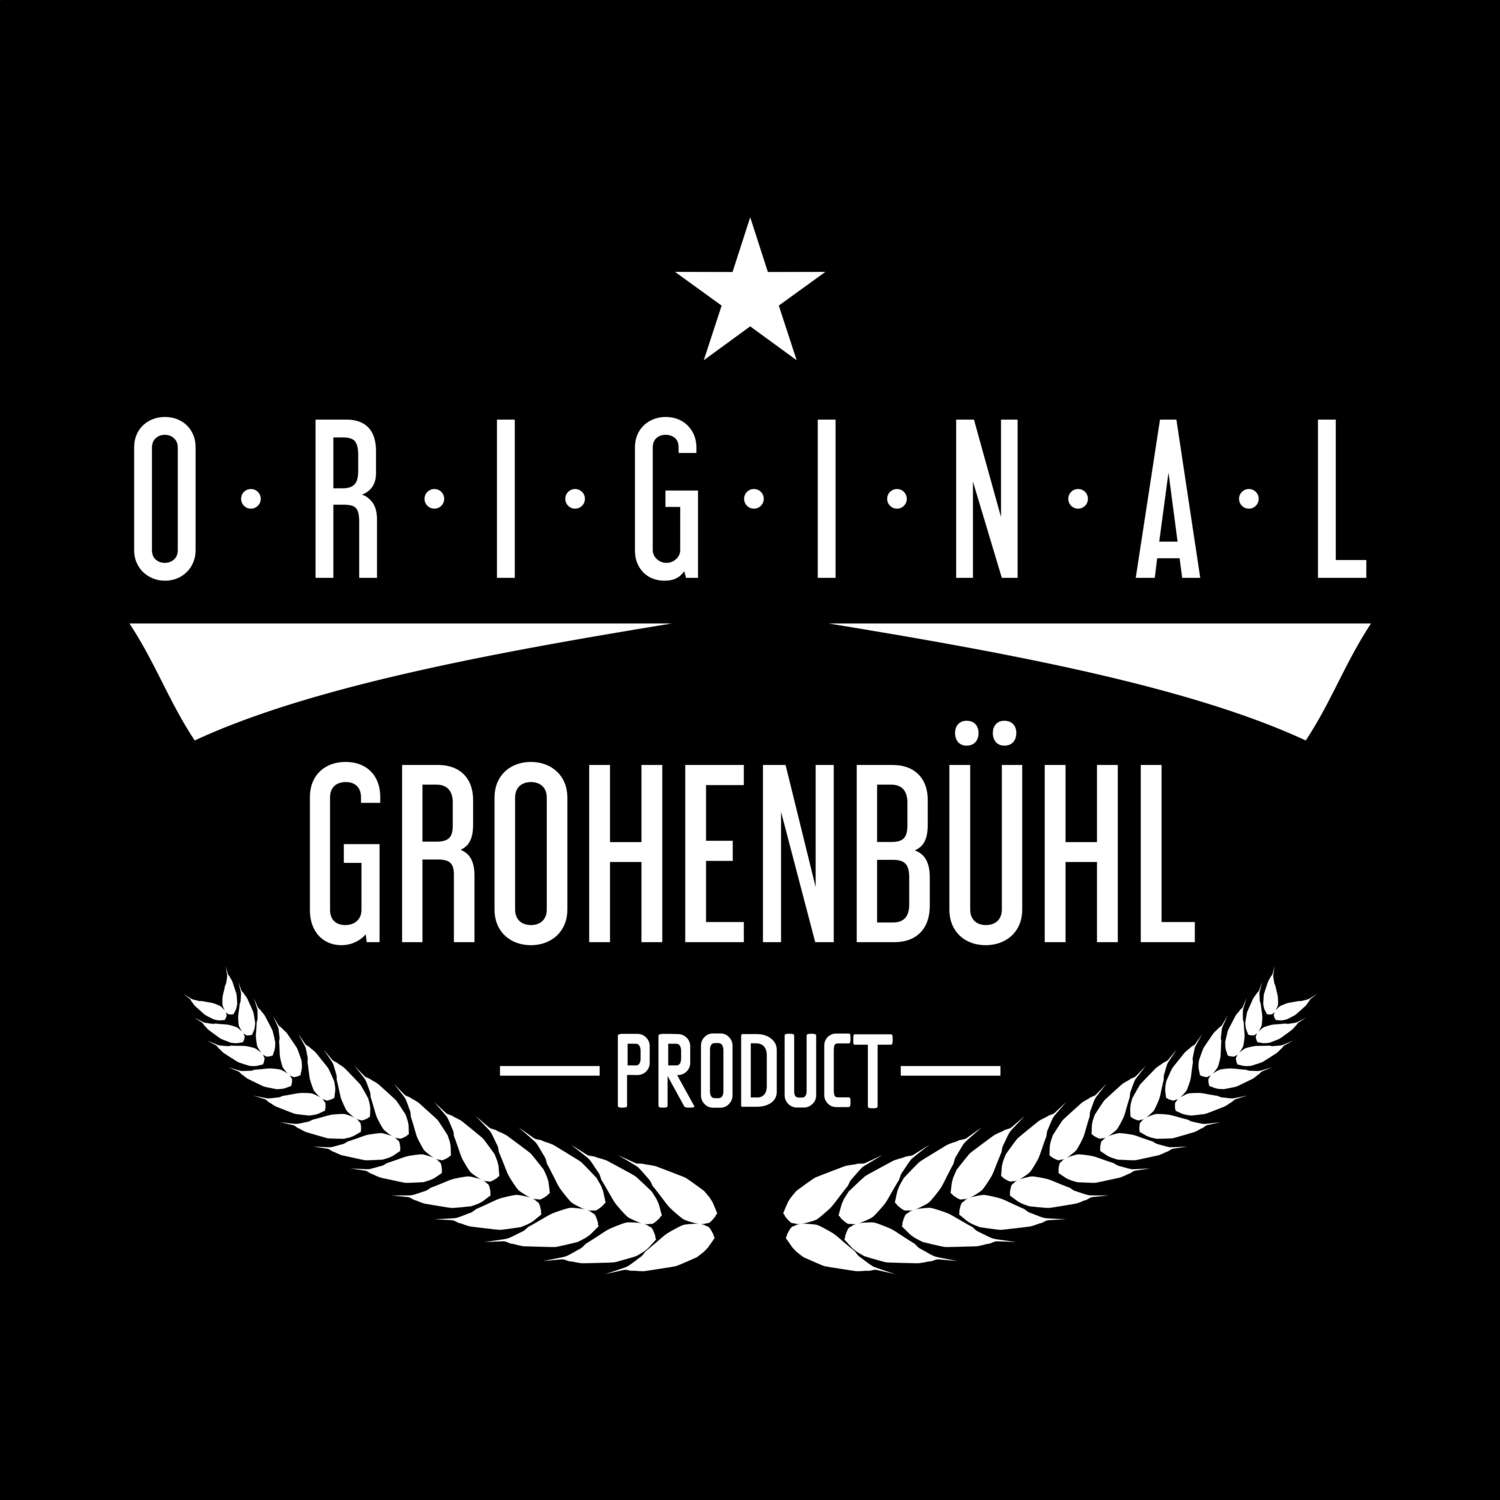 Grohenbühl T-Shirt »Original Product«